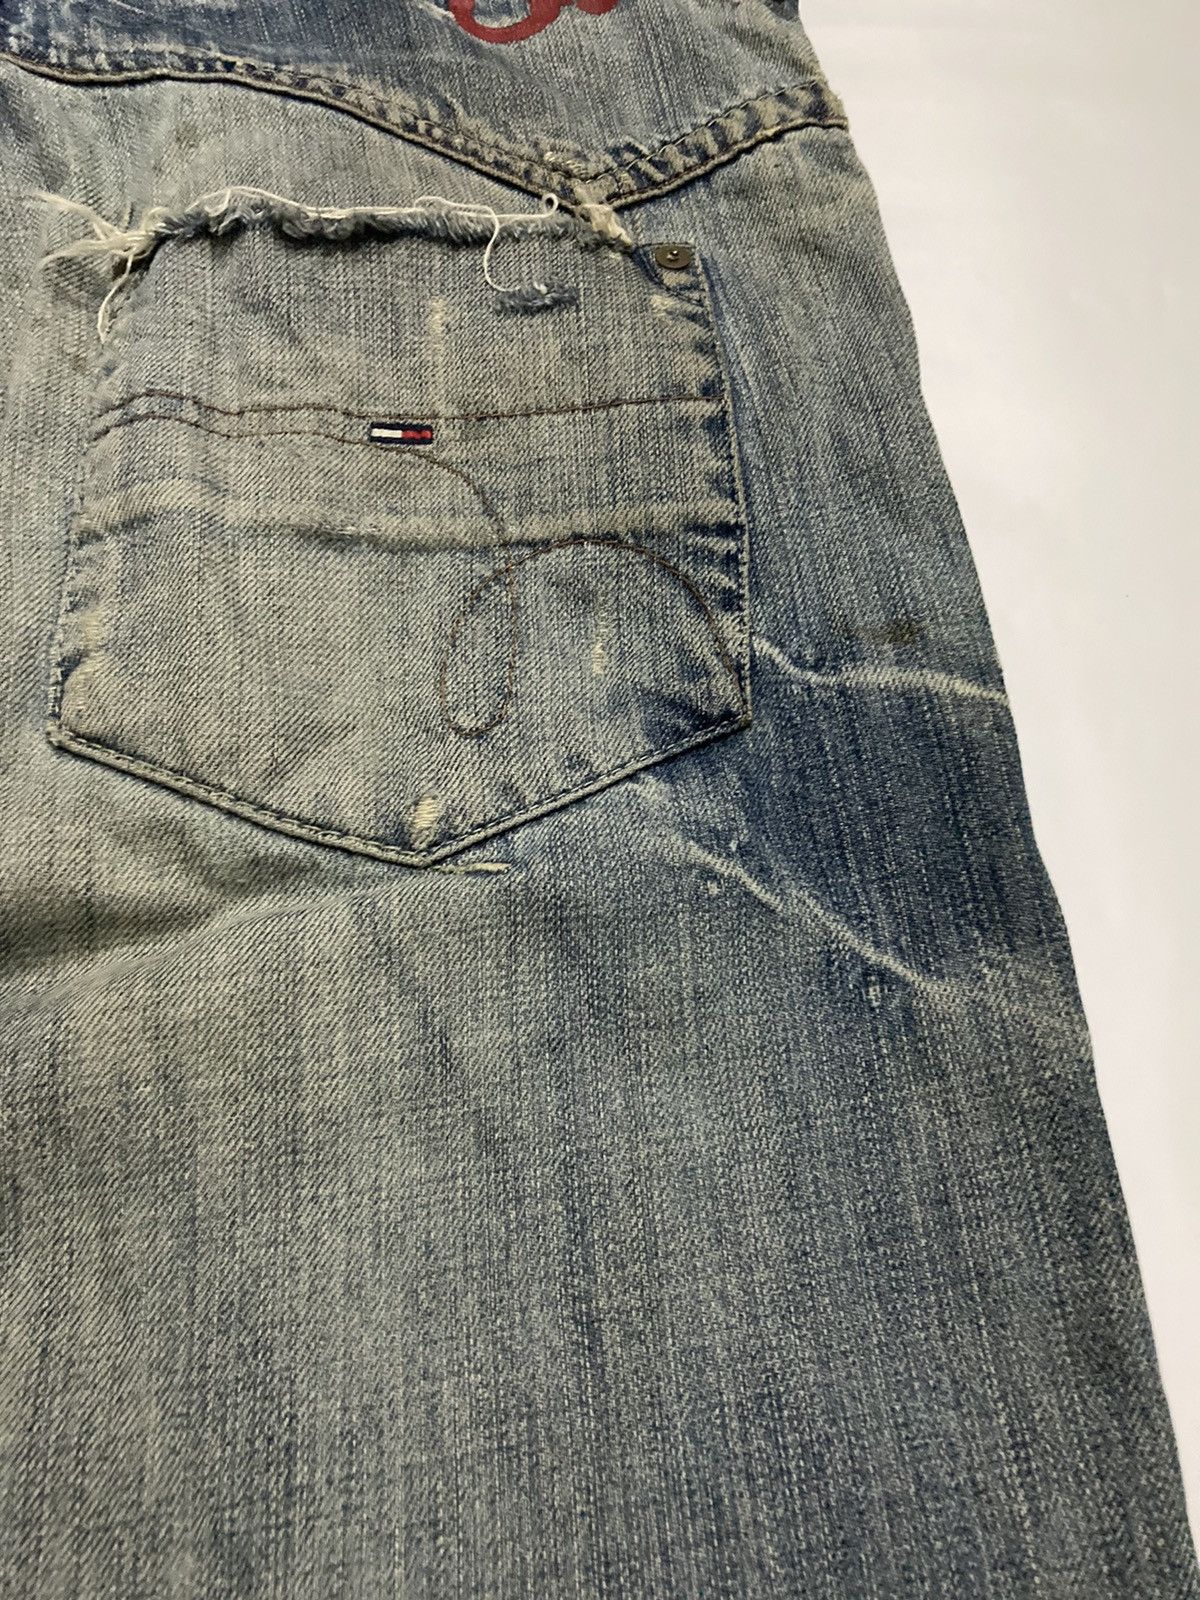 Tommy Hilfiger Denim Distressed Jeans - 13